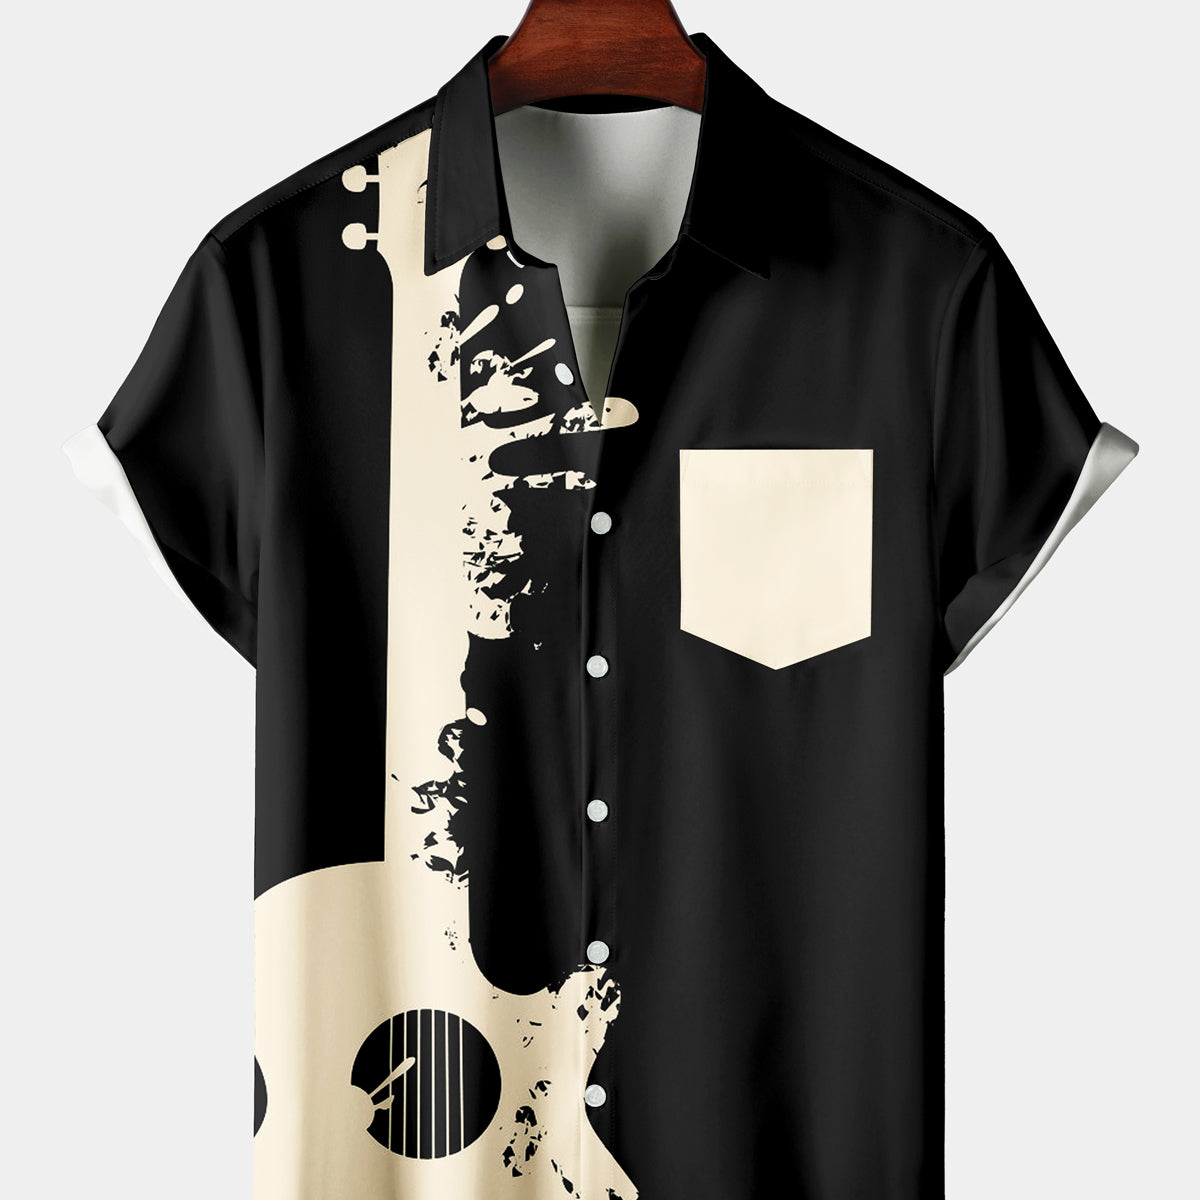 Men's Retro Casual Music Black Bowling Short Sleeve Shirt